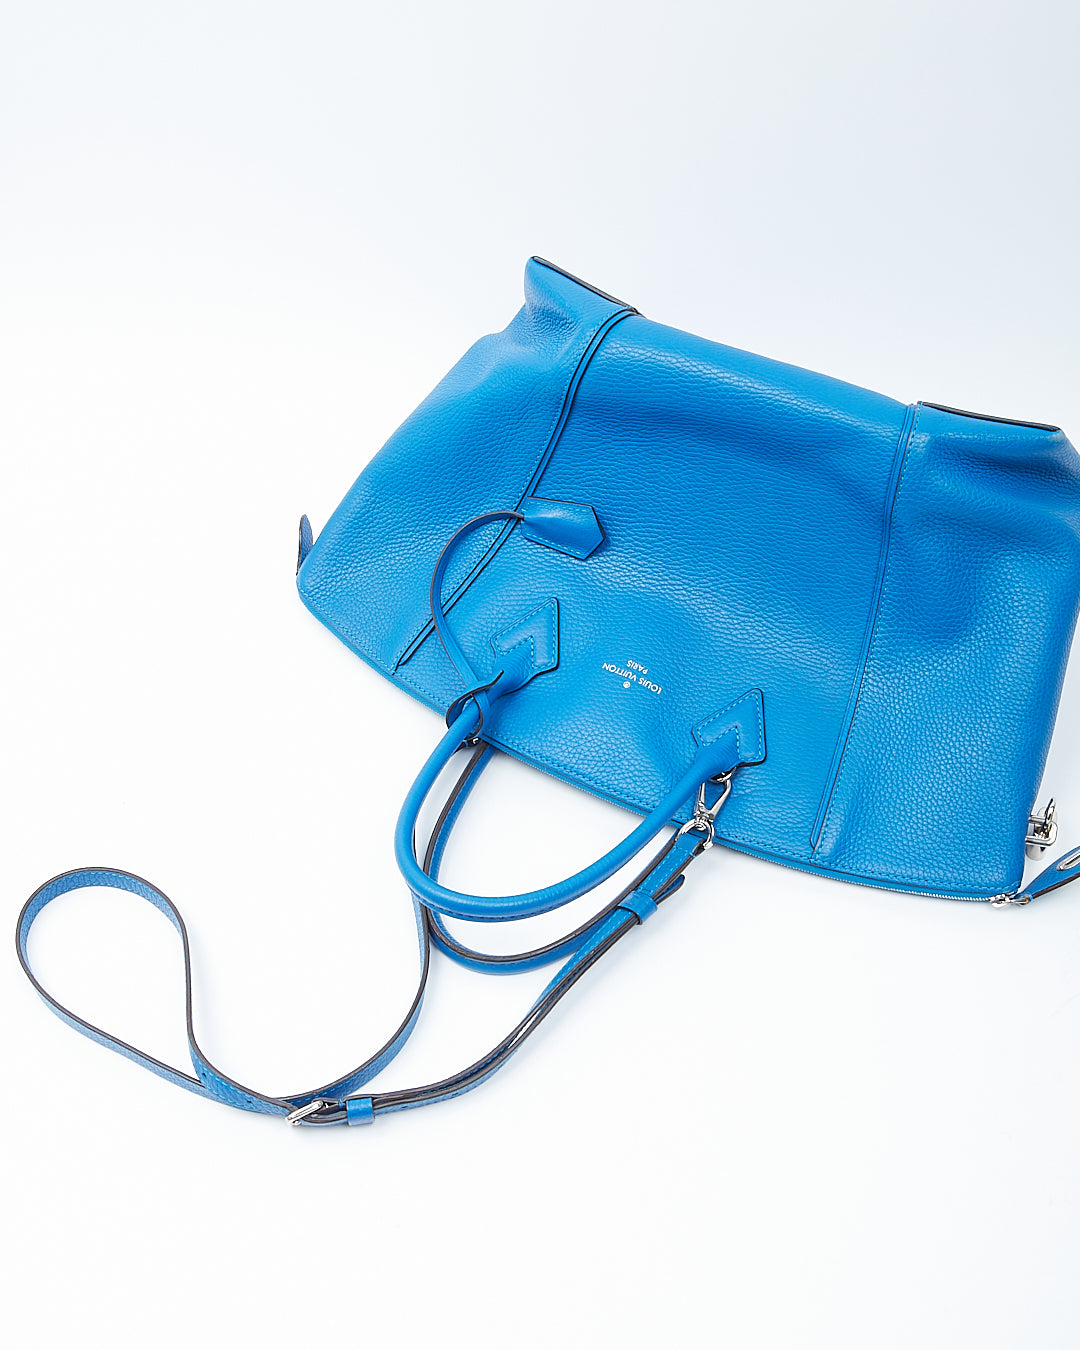 Louis Vuitton Royal Blue Taurillon Leather Soft Lockit MM Bag